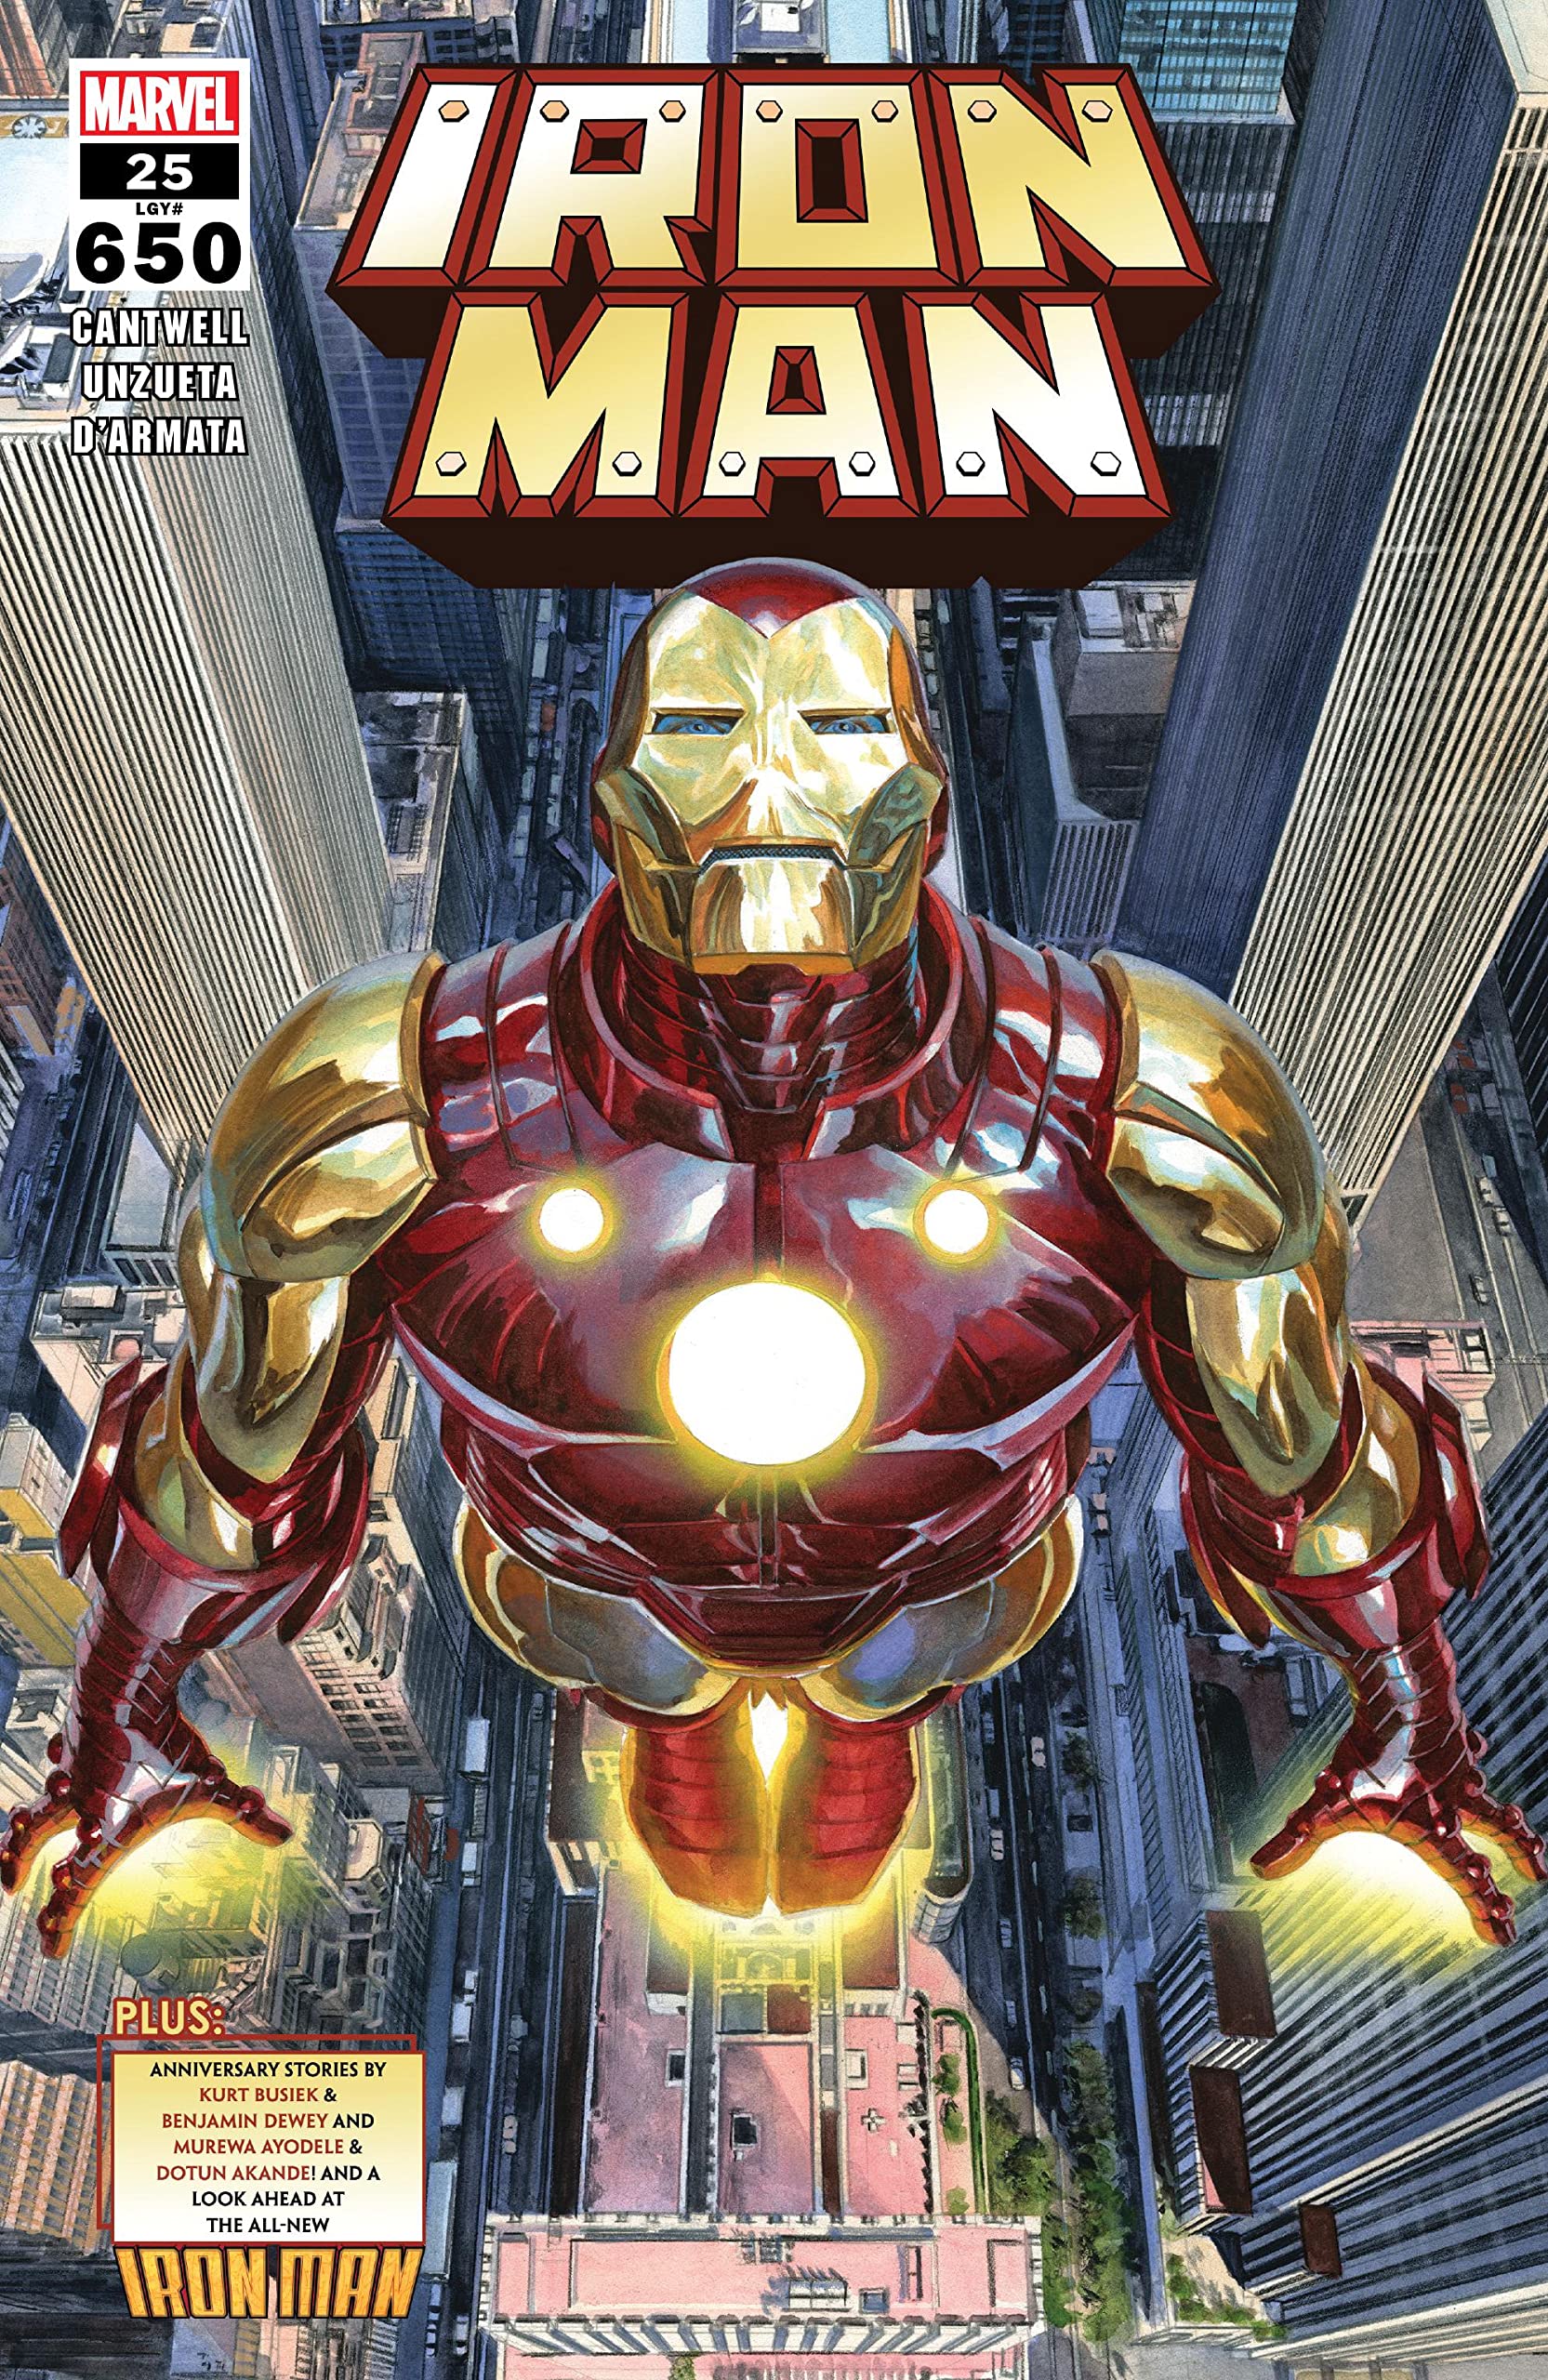 iron man comic cover design